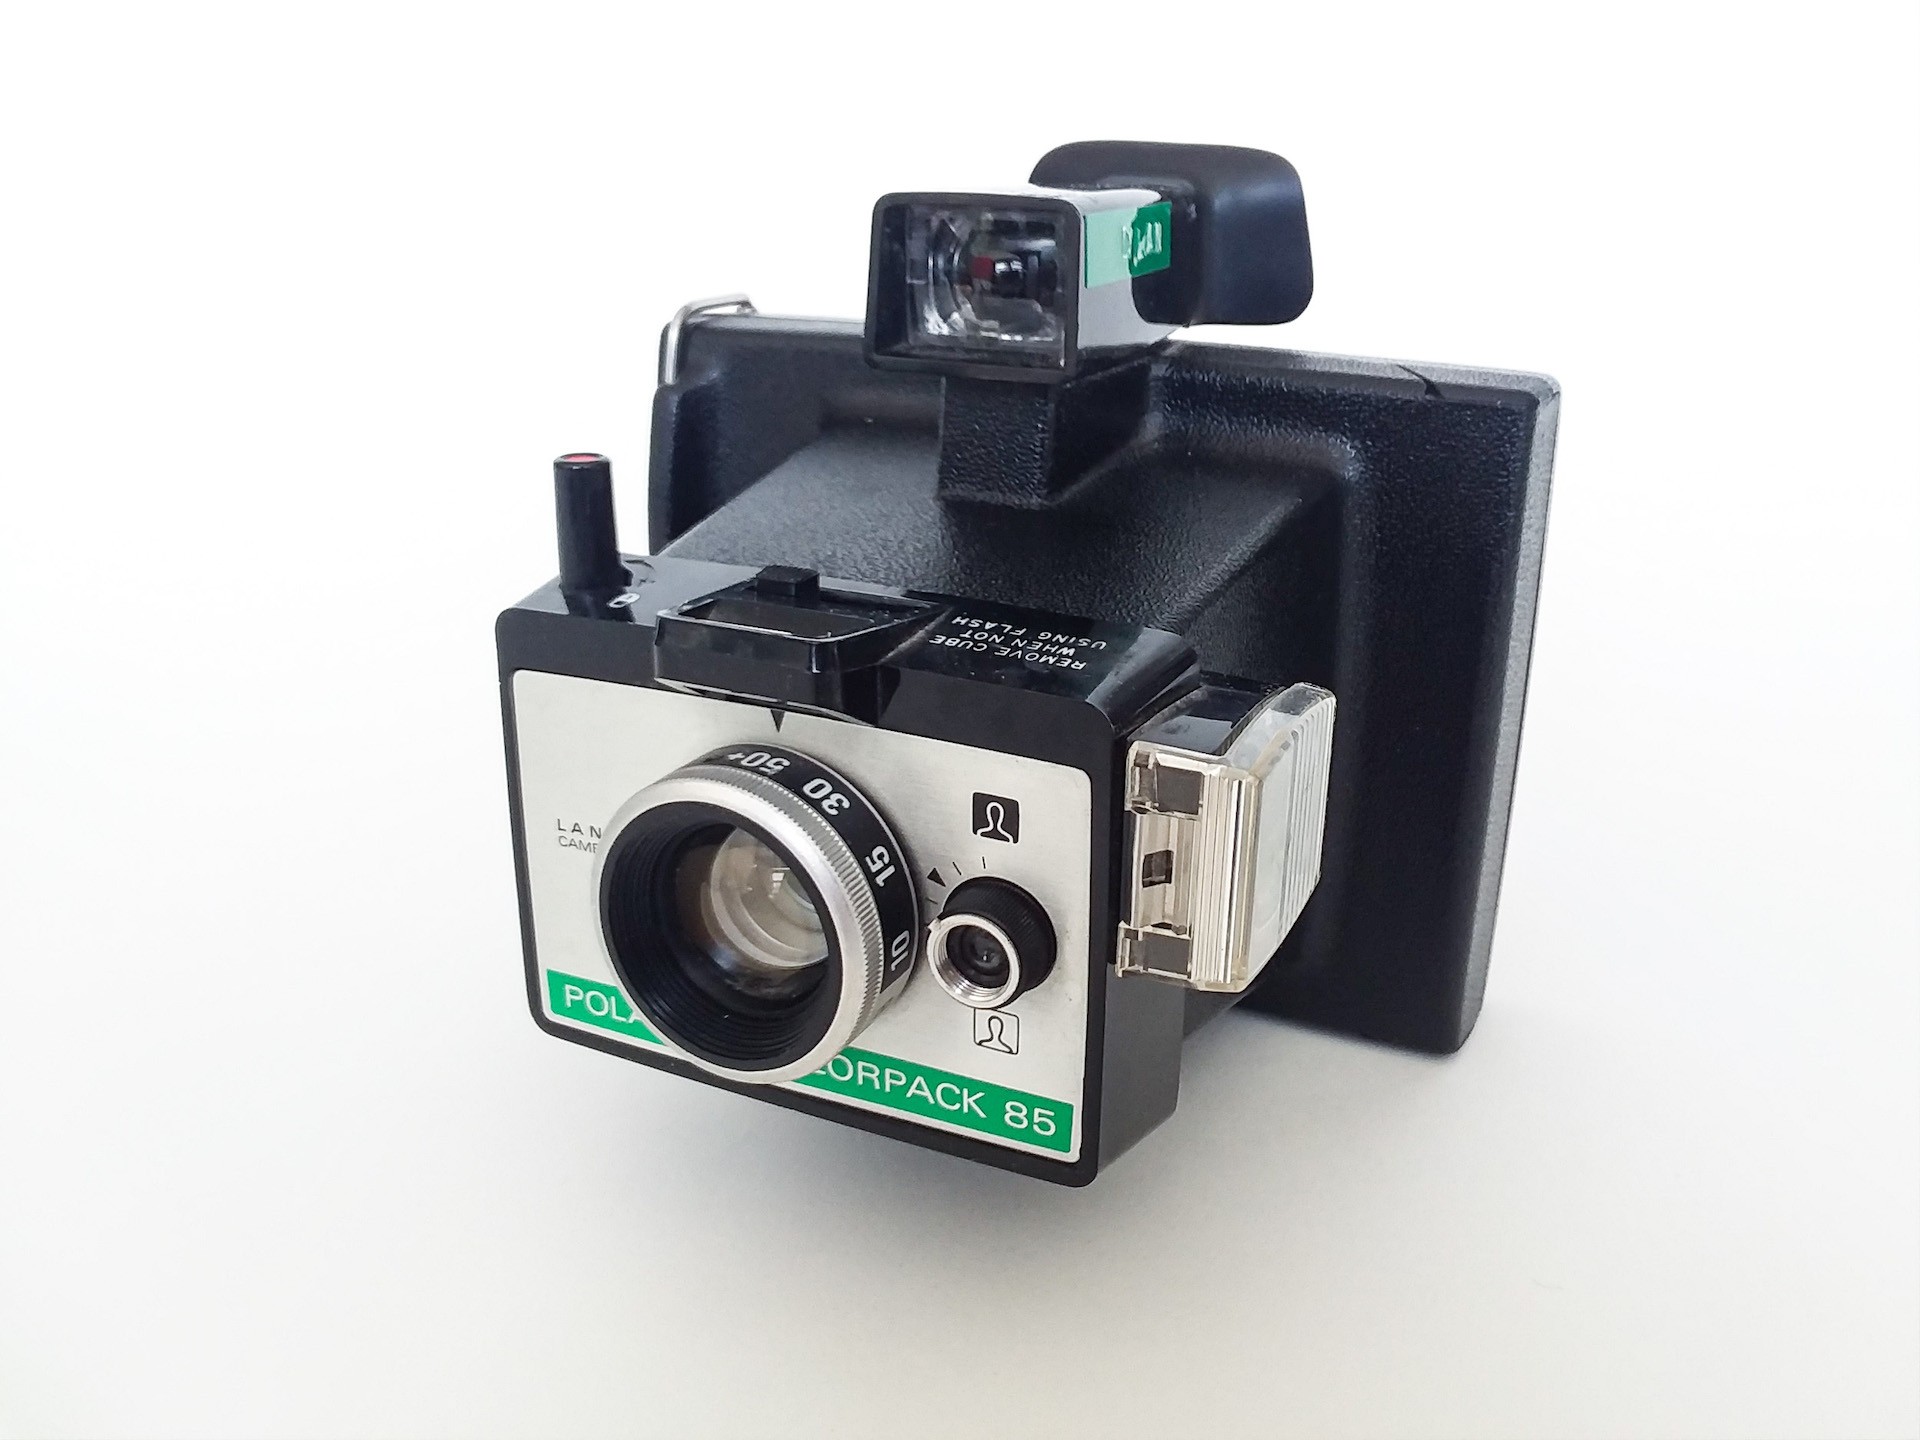 a Polaroid ColorPack 85 camera